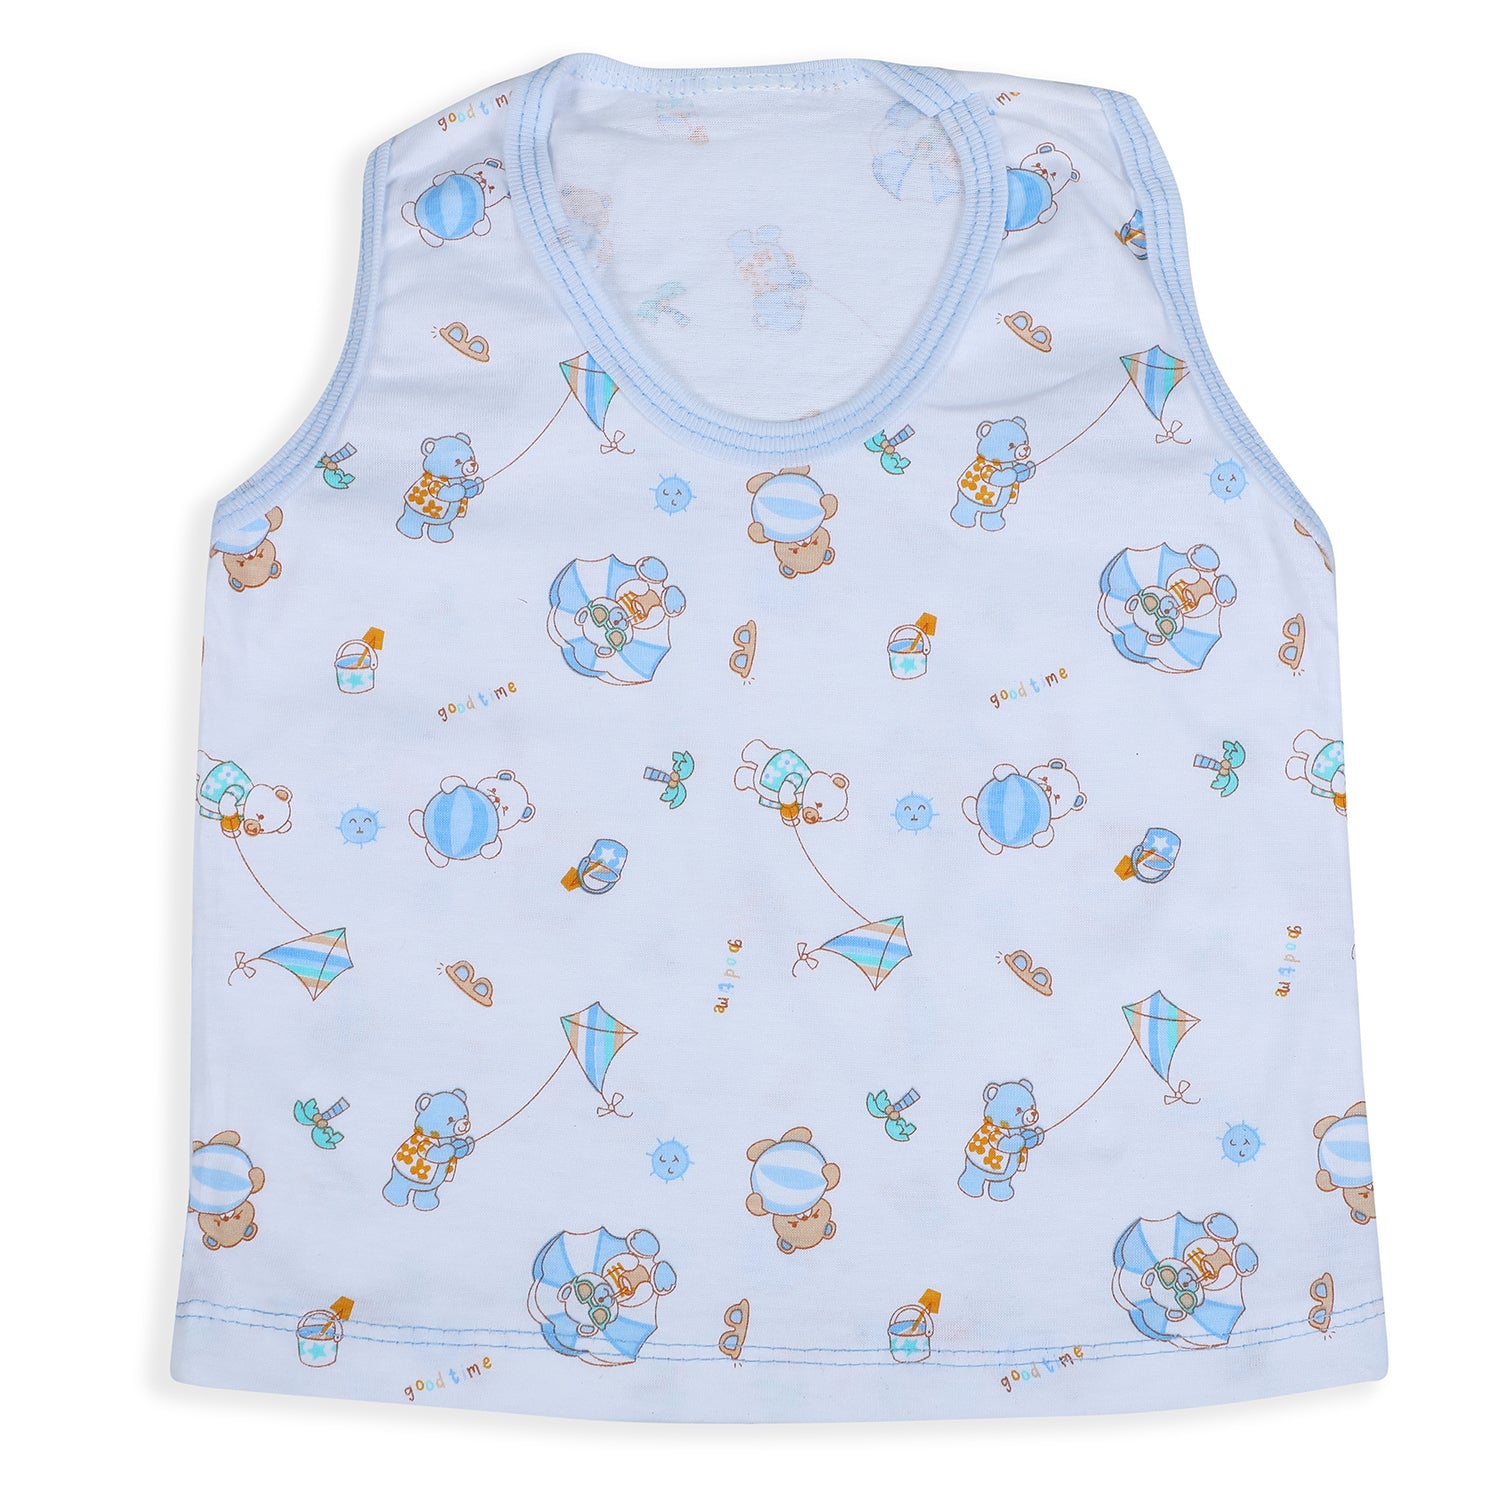 Baby Moo Kite Flying Bear Pure Cotton Sleeveless Vest With Matching Bottom 2pcs Set - Blue - Baby Moo